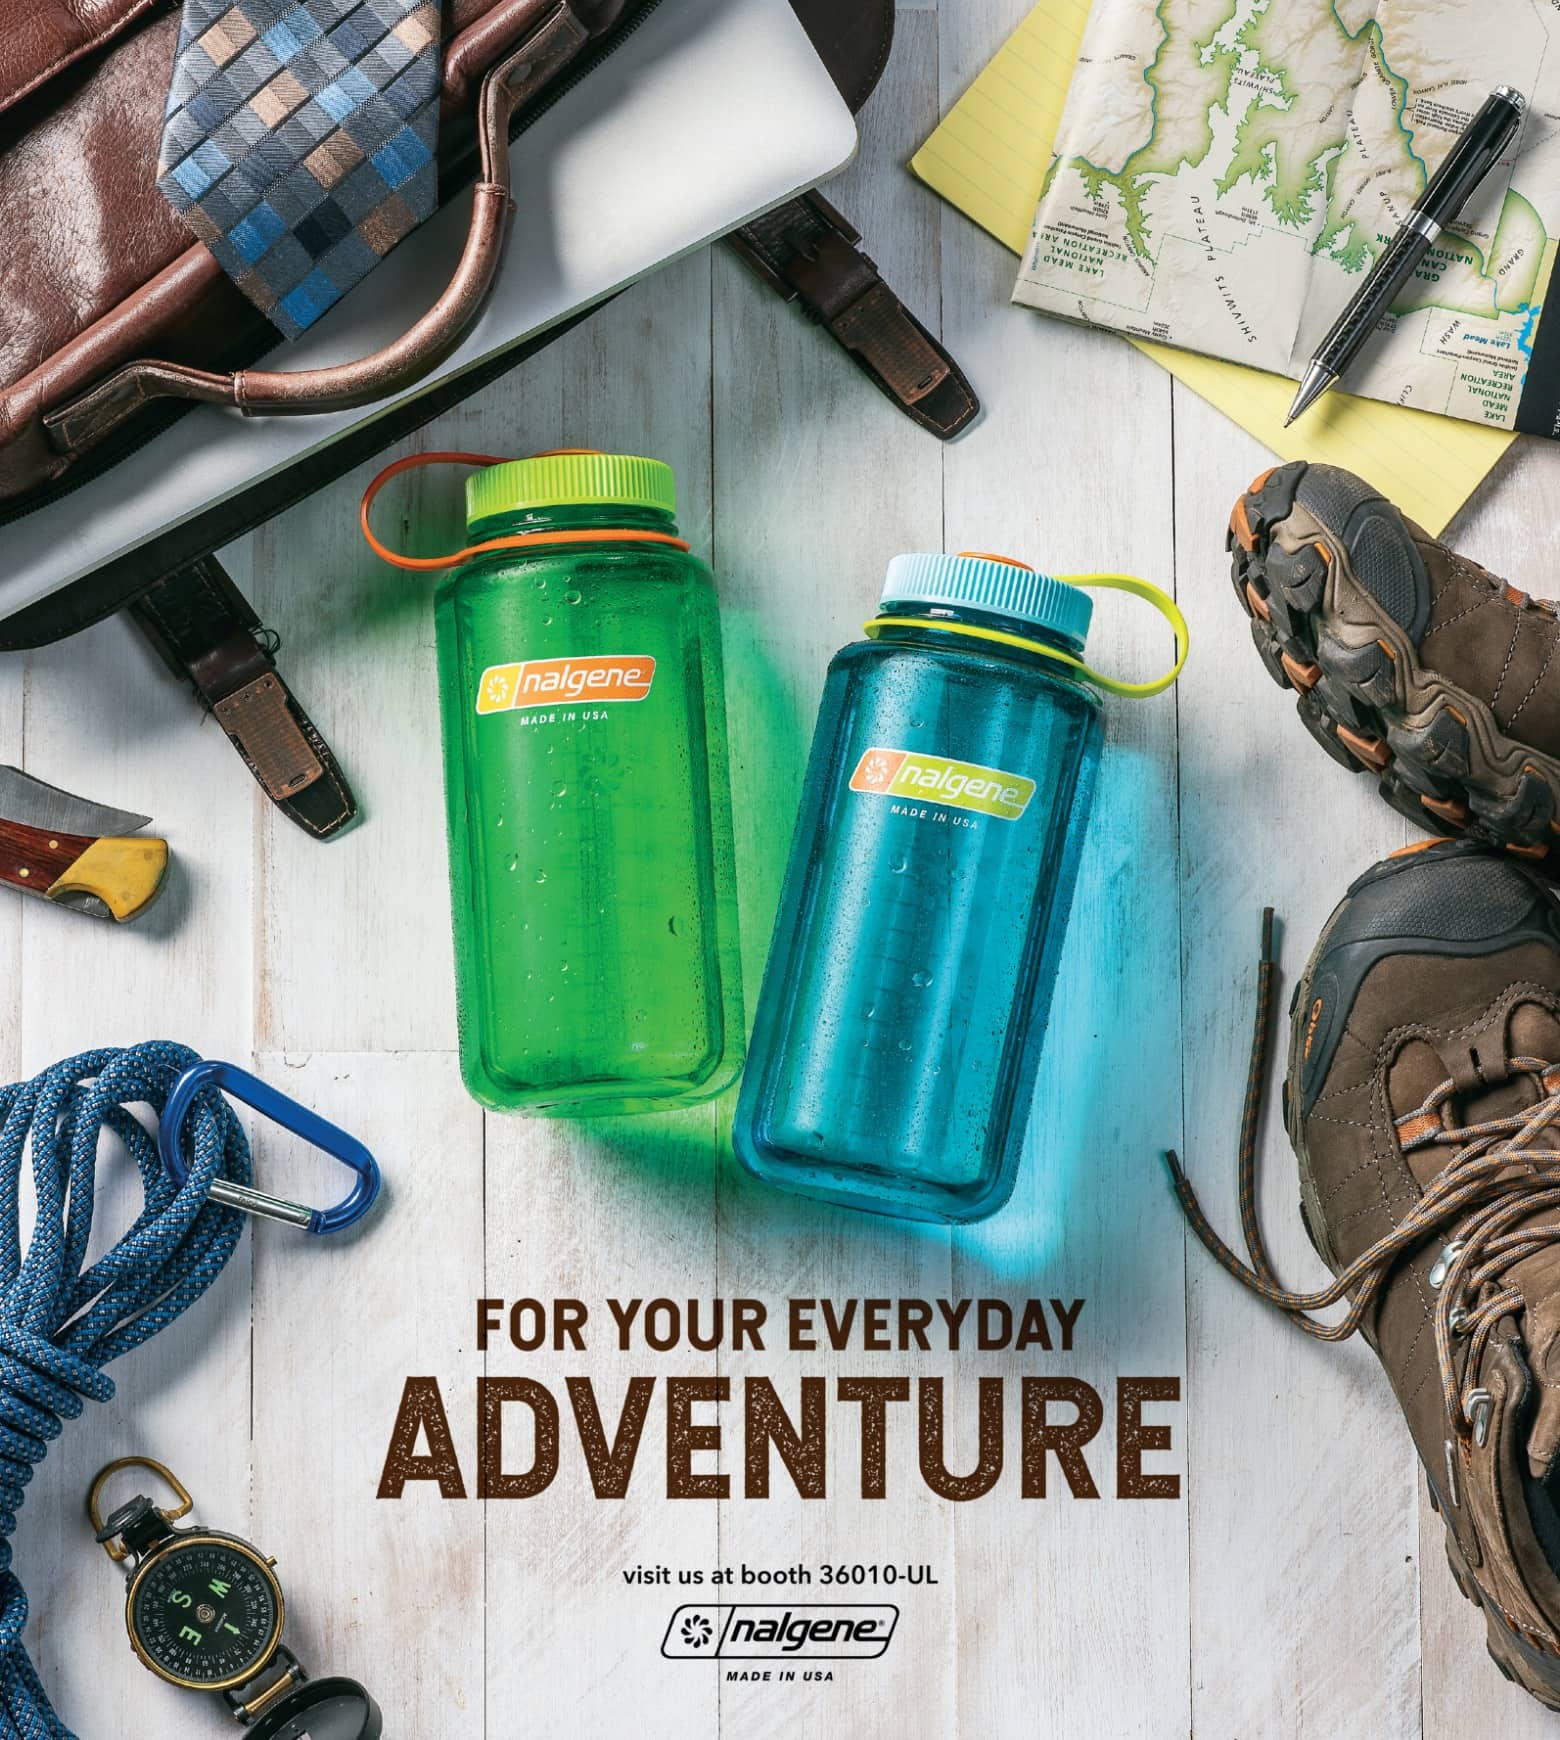 Nalgene water bottles surrounded by hiking gear